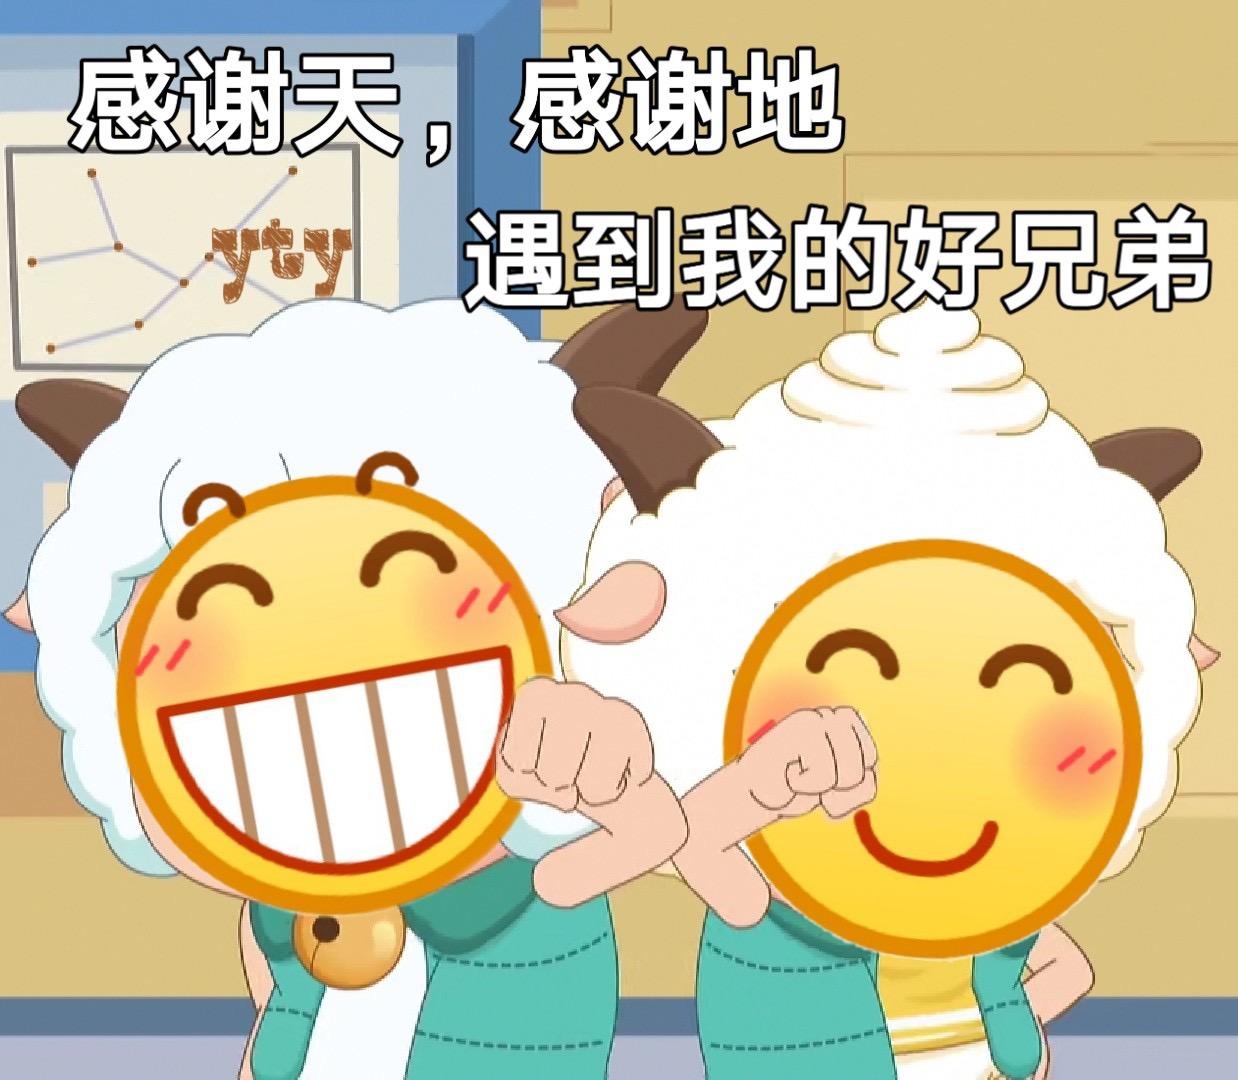 qq表情笑脸设计图__动漫人物_动漫动画_设计图库_昵图网nipic.com